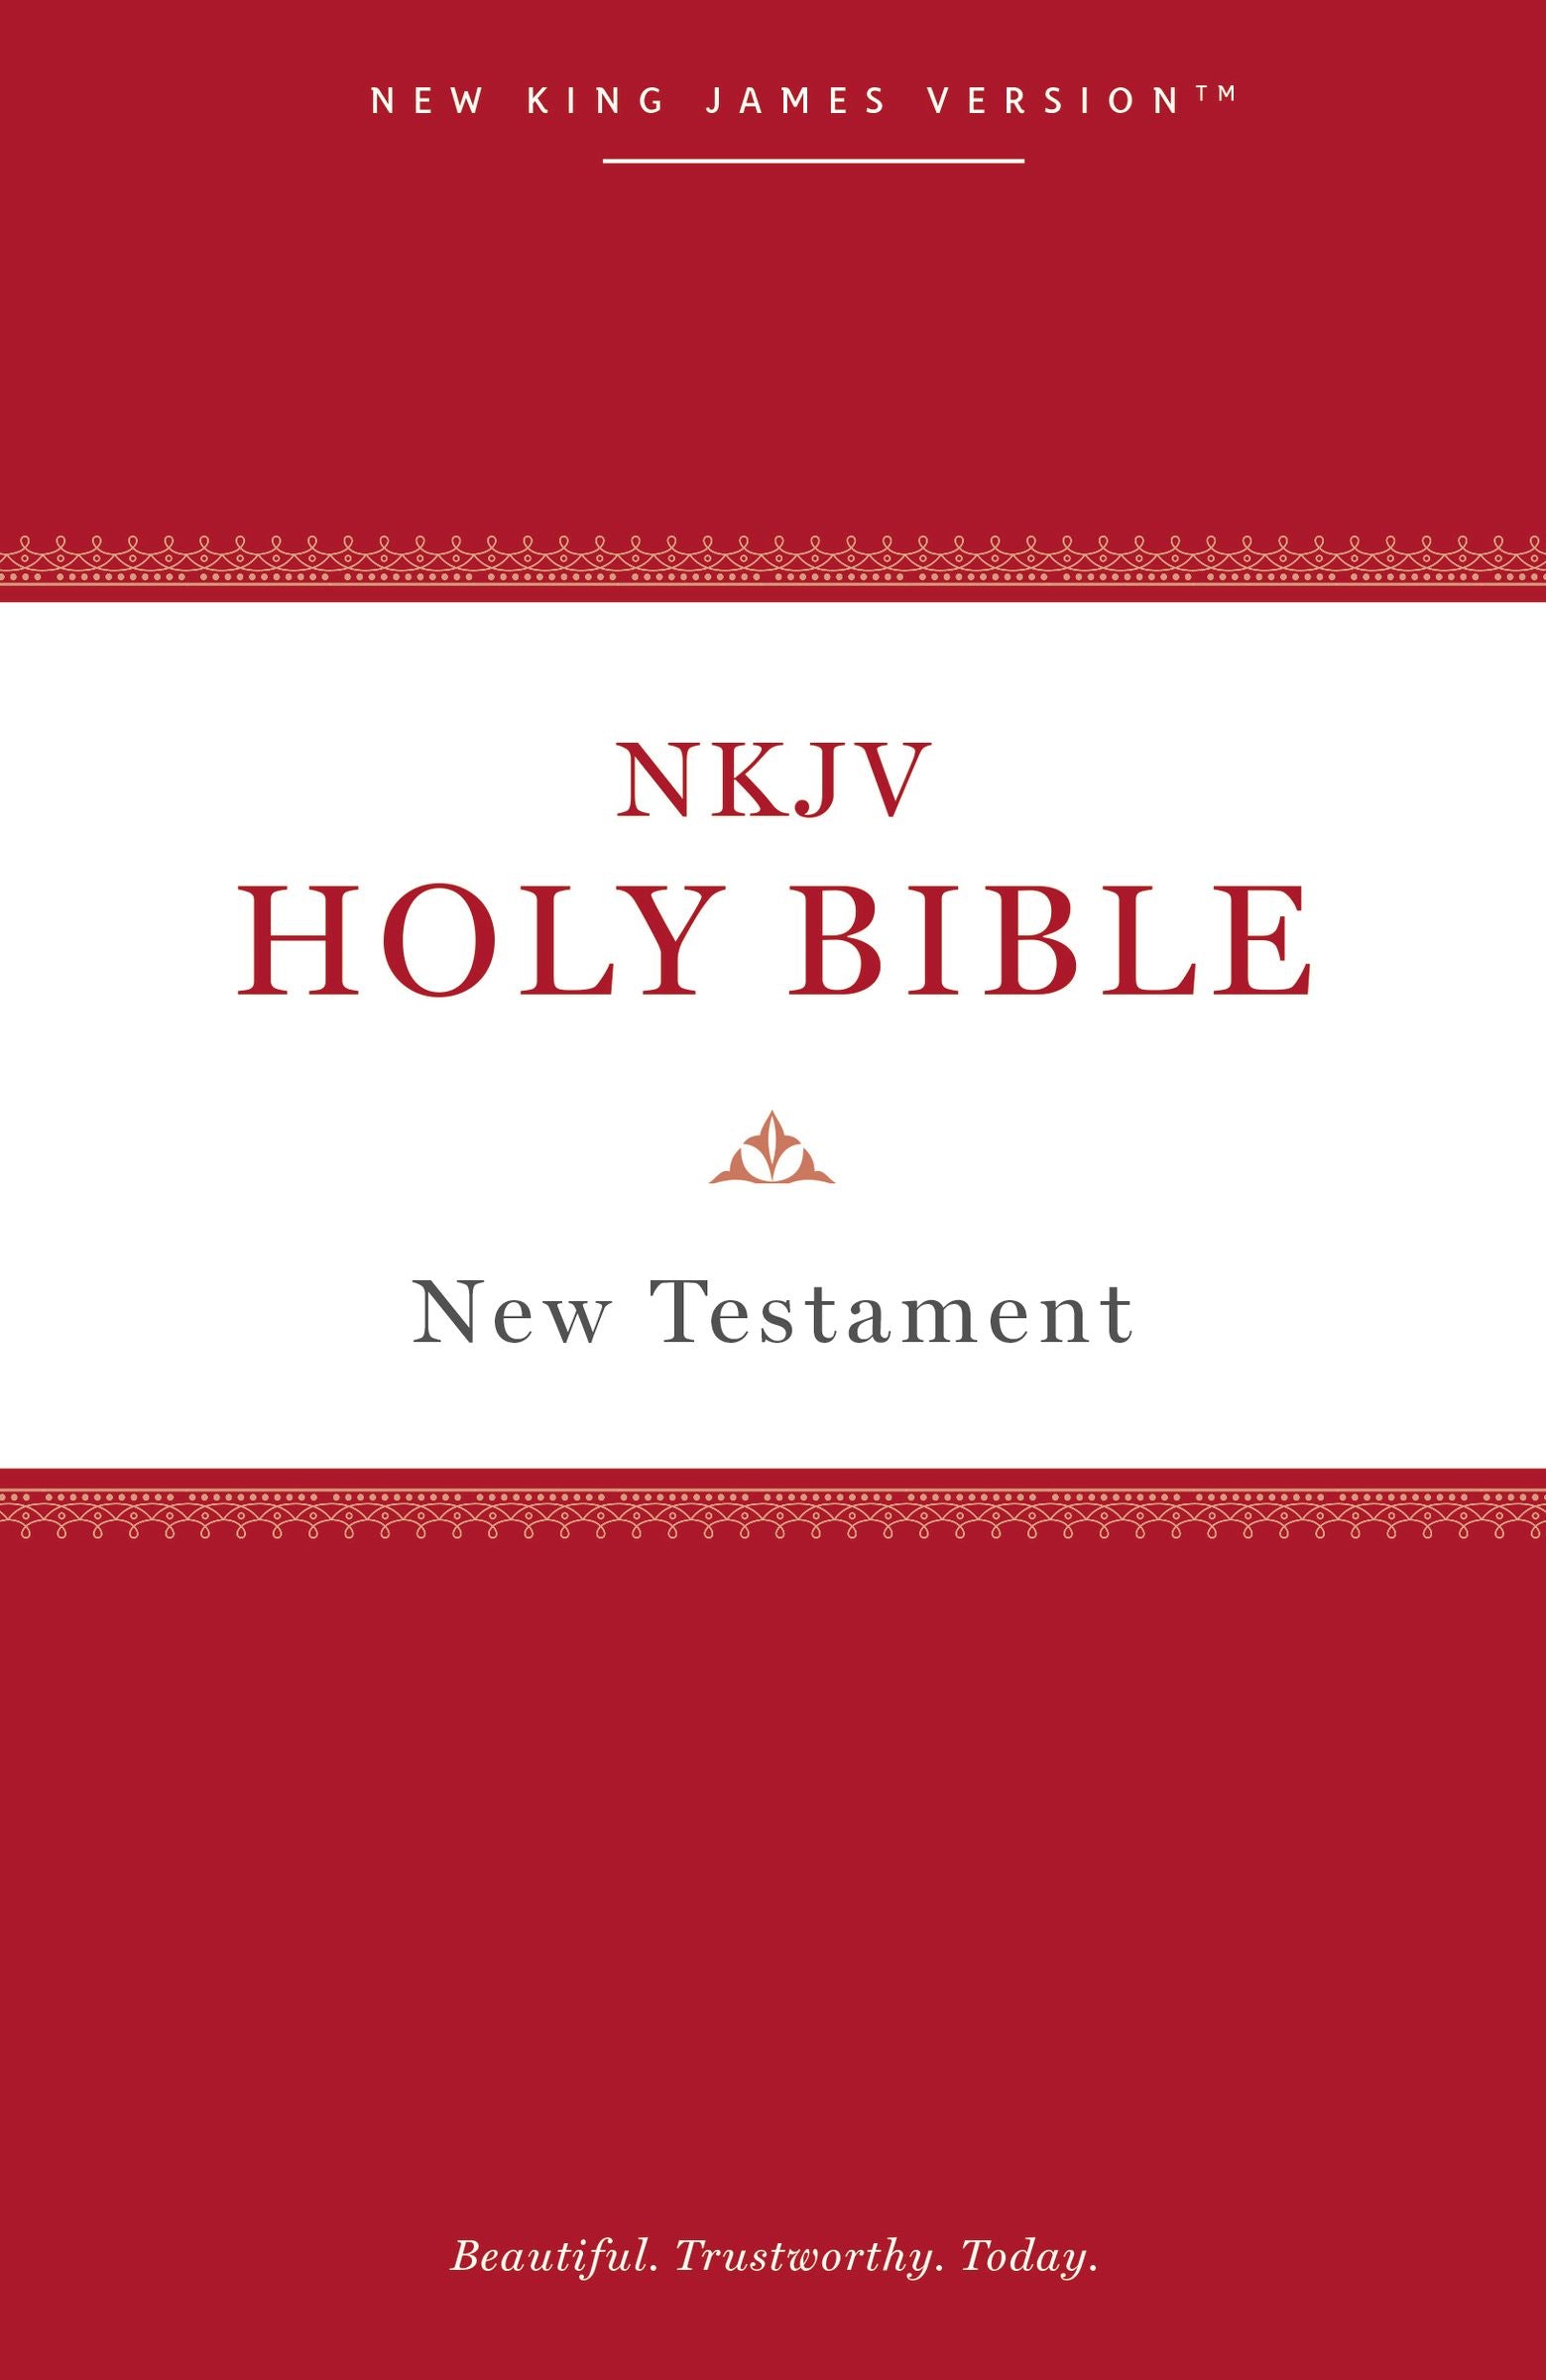 Image of NKJV Holy Bible New Testament other